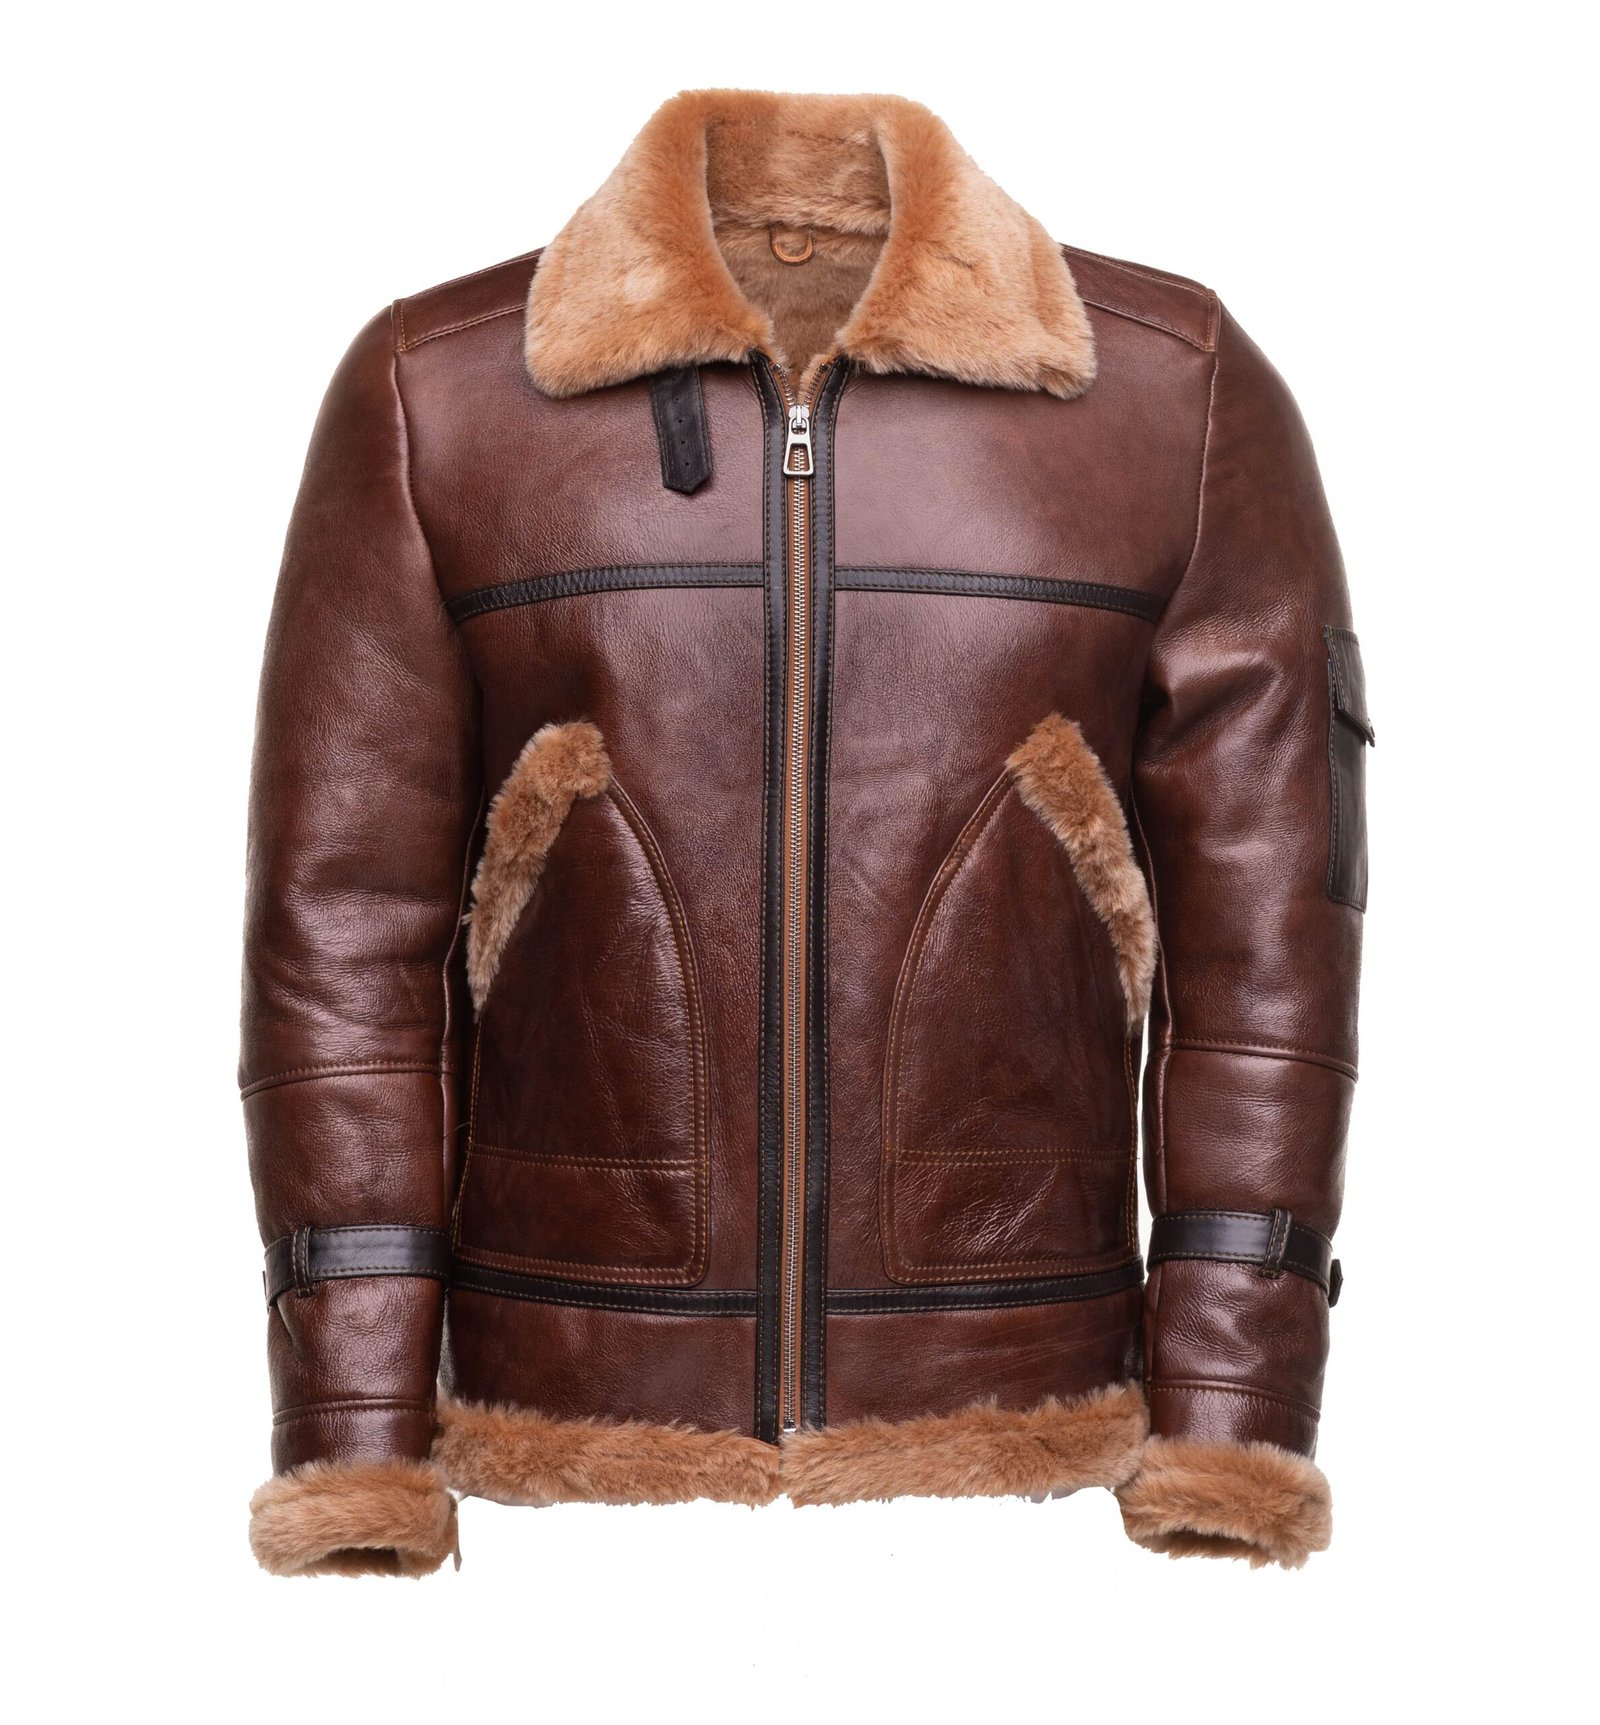 Esa Brown Bomber Sheepskin Leather Jacket with large pockets | Best ...